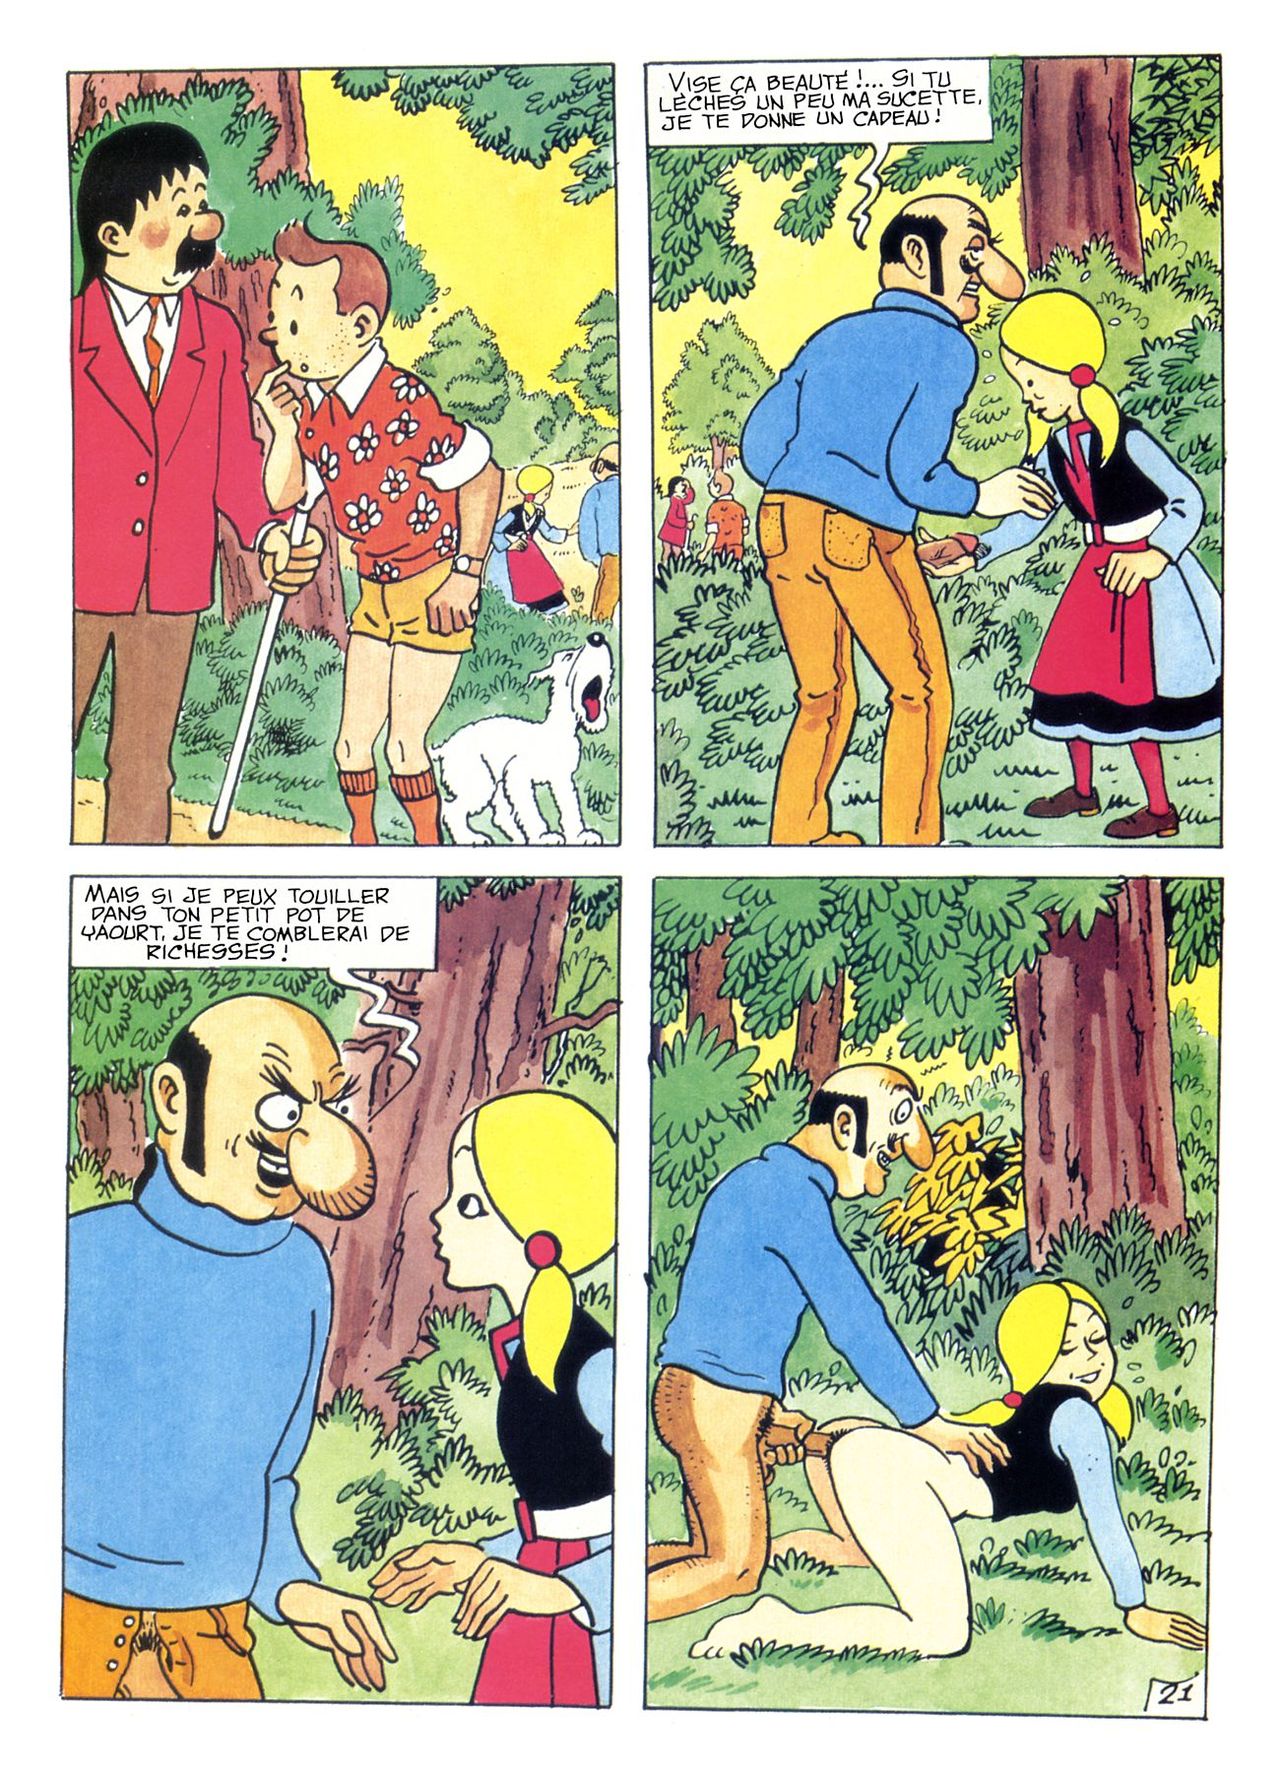 La Vie Sexuelle De Tintin numero d'image 24